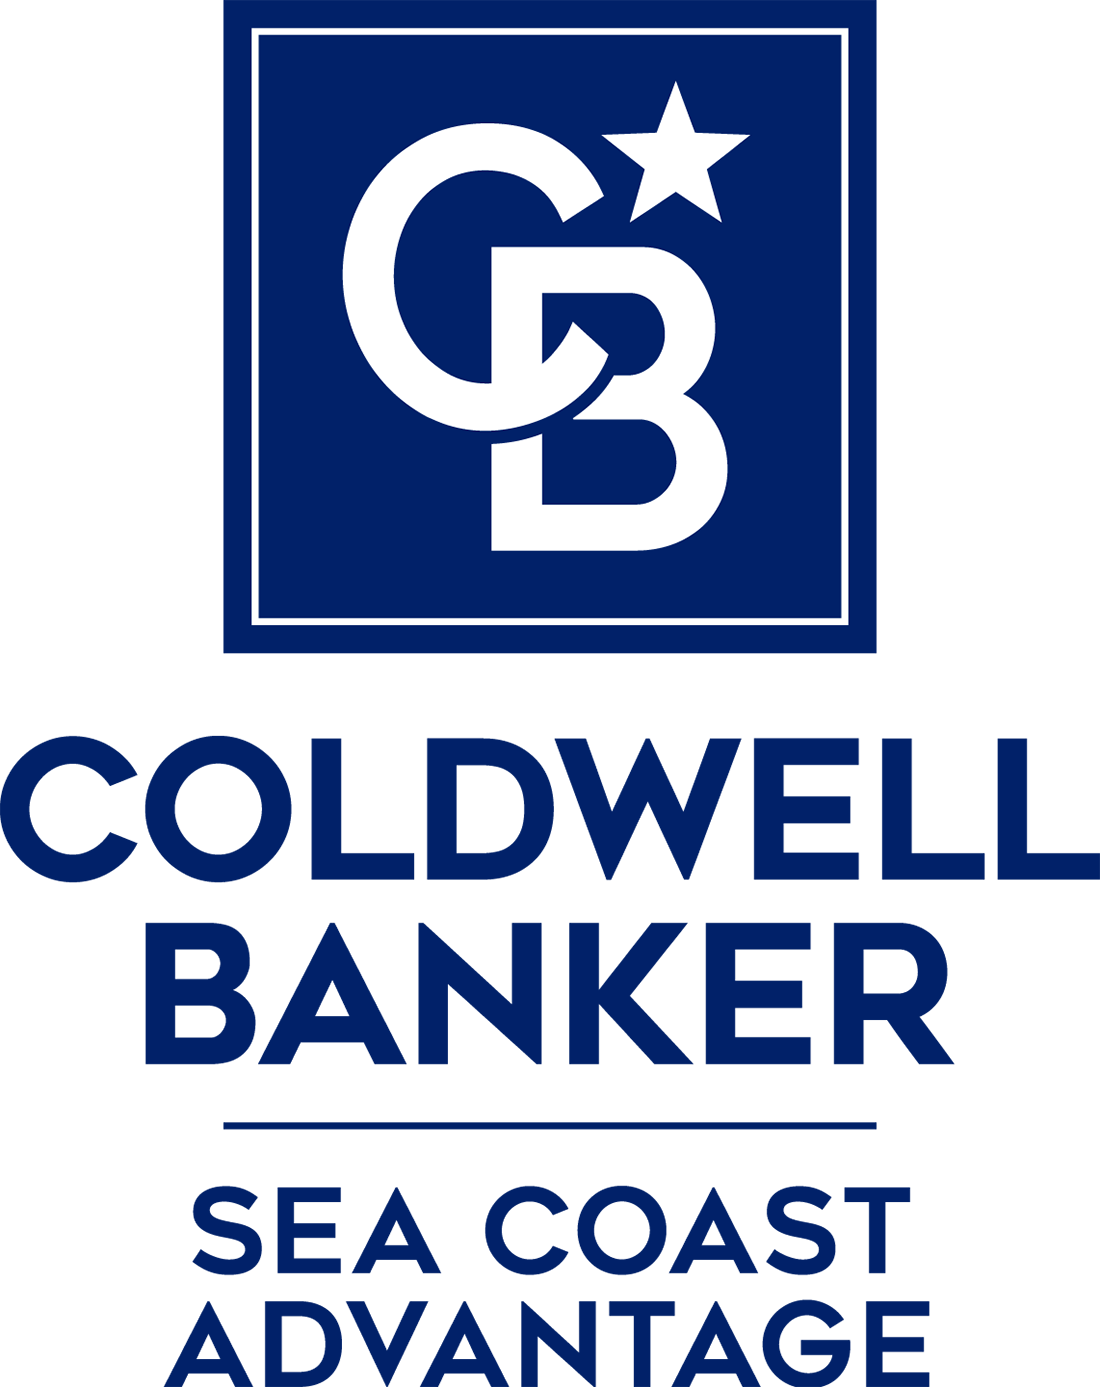 Lee Bryant - Coldwell Banker Sea Coast Advantage Realty Logo